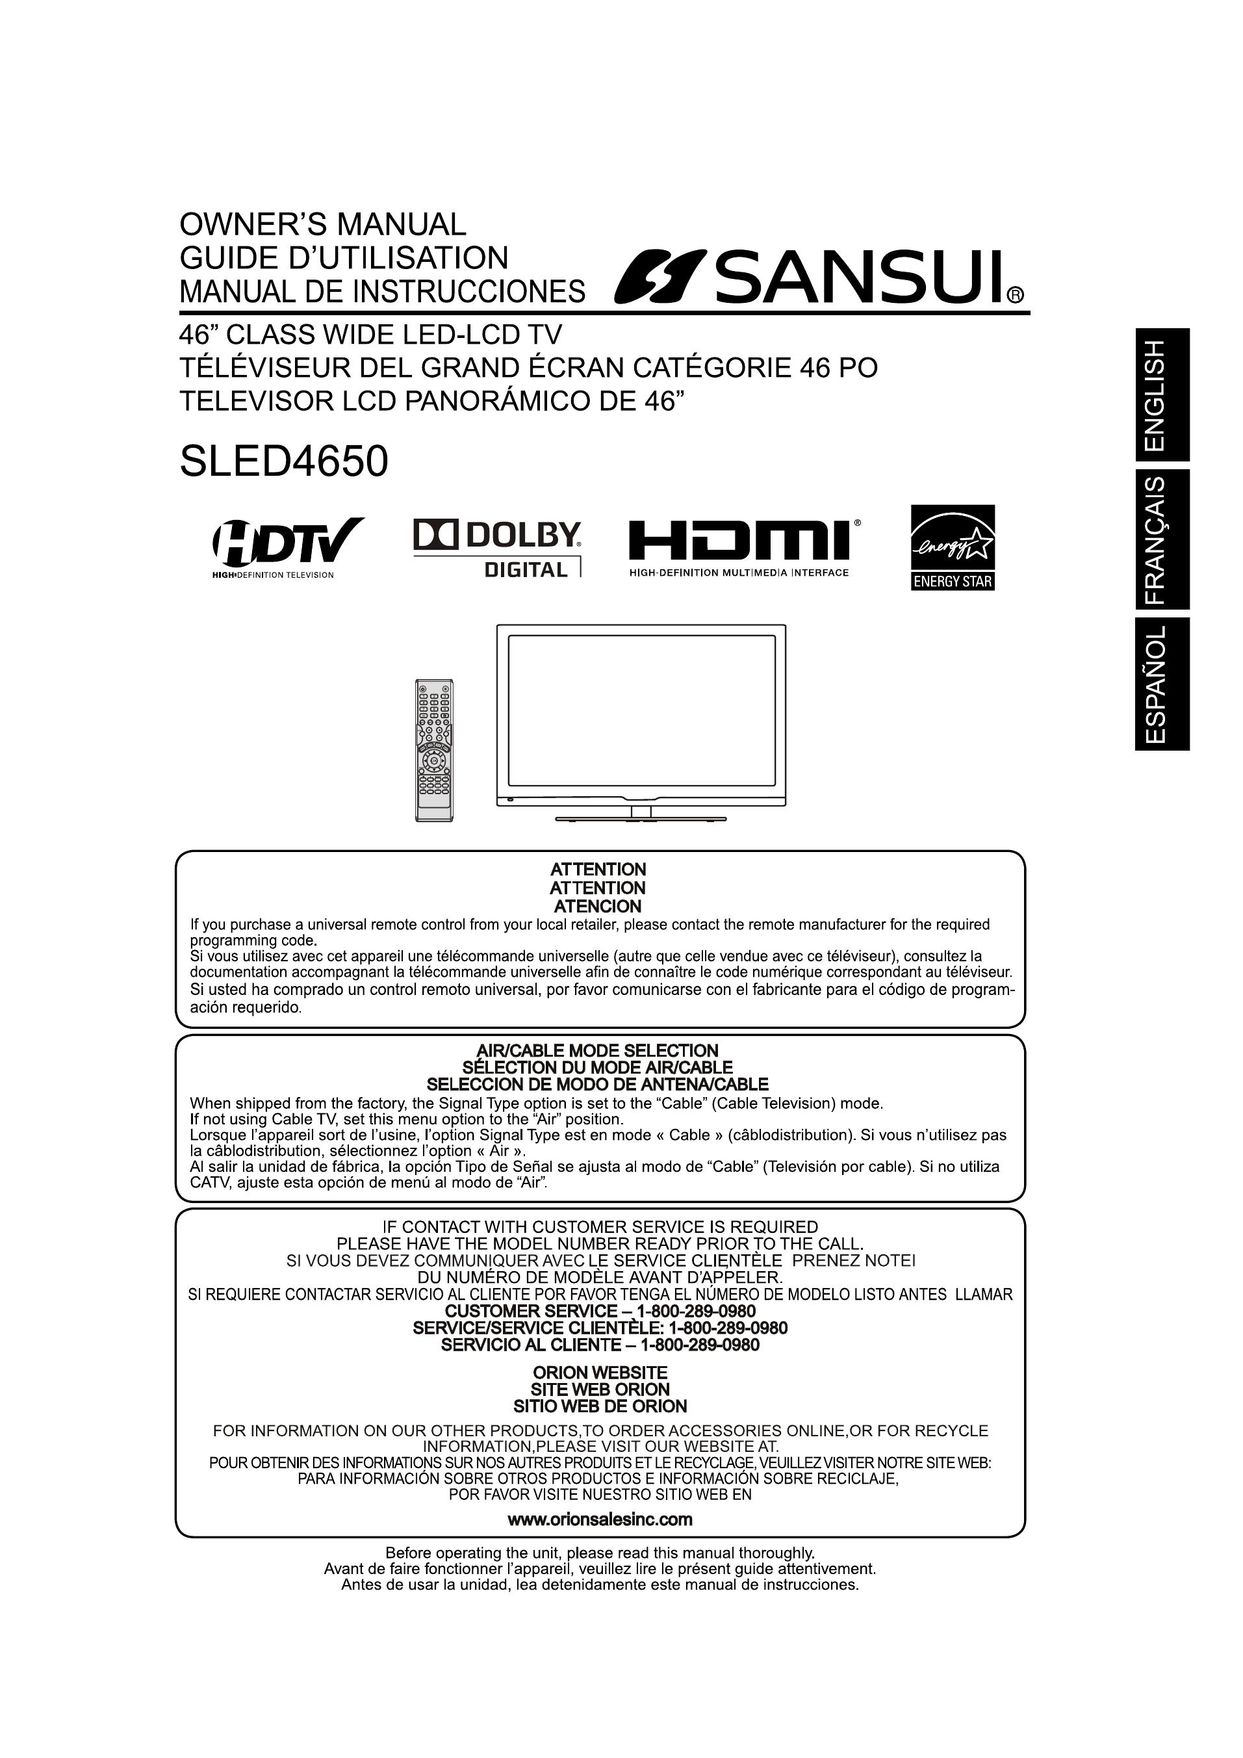 Sansui SLED4650 Flat Panel Television User Manual